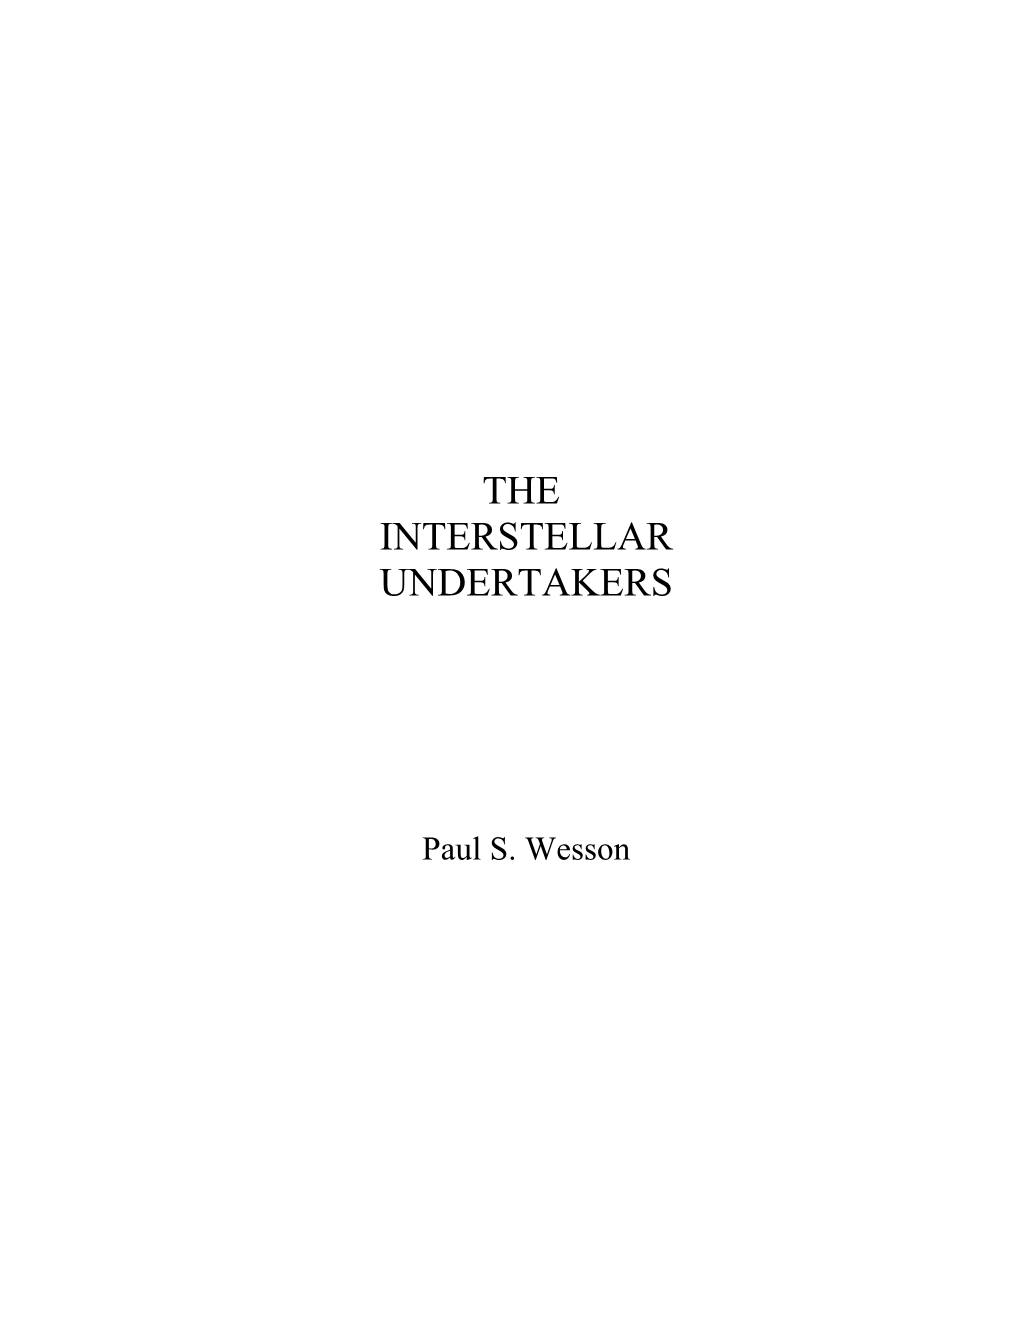 The Interstellar Undertakers